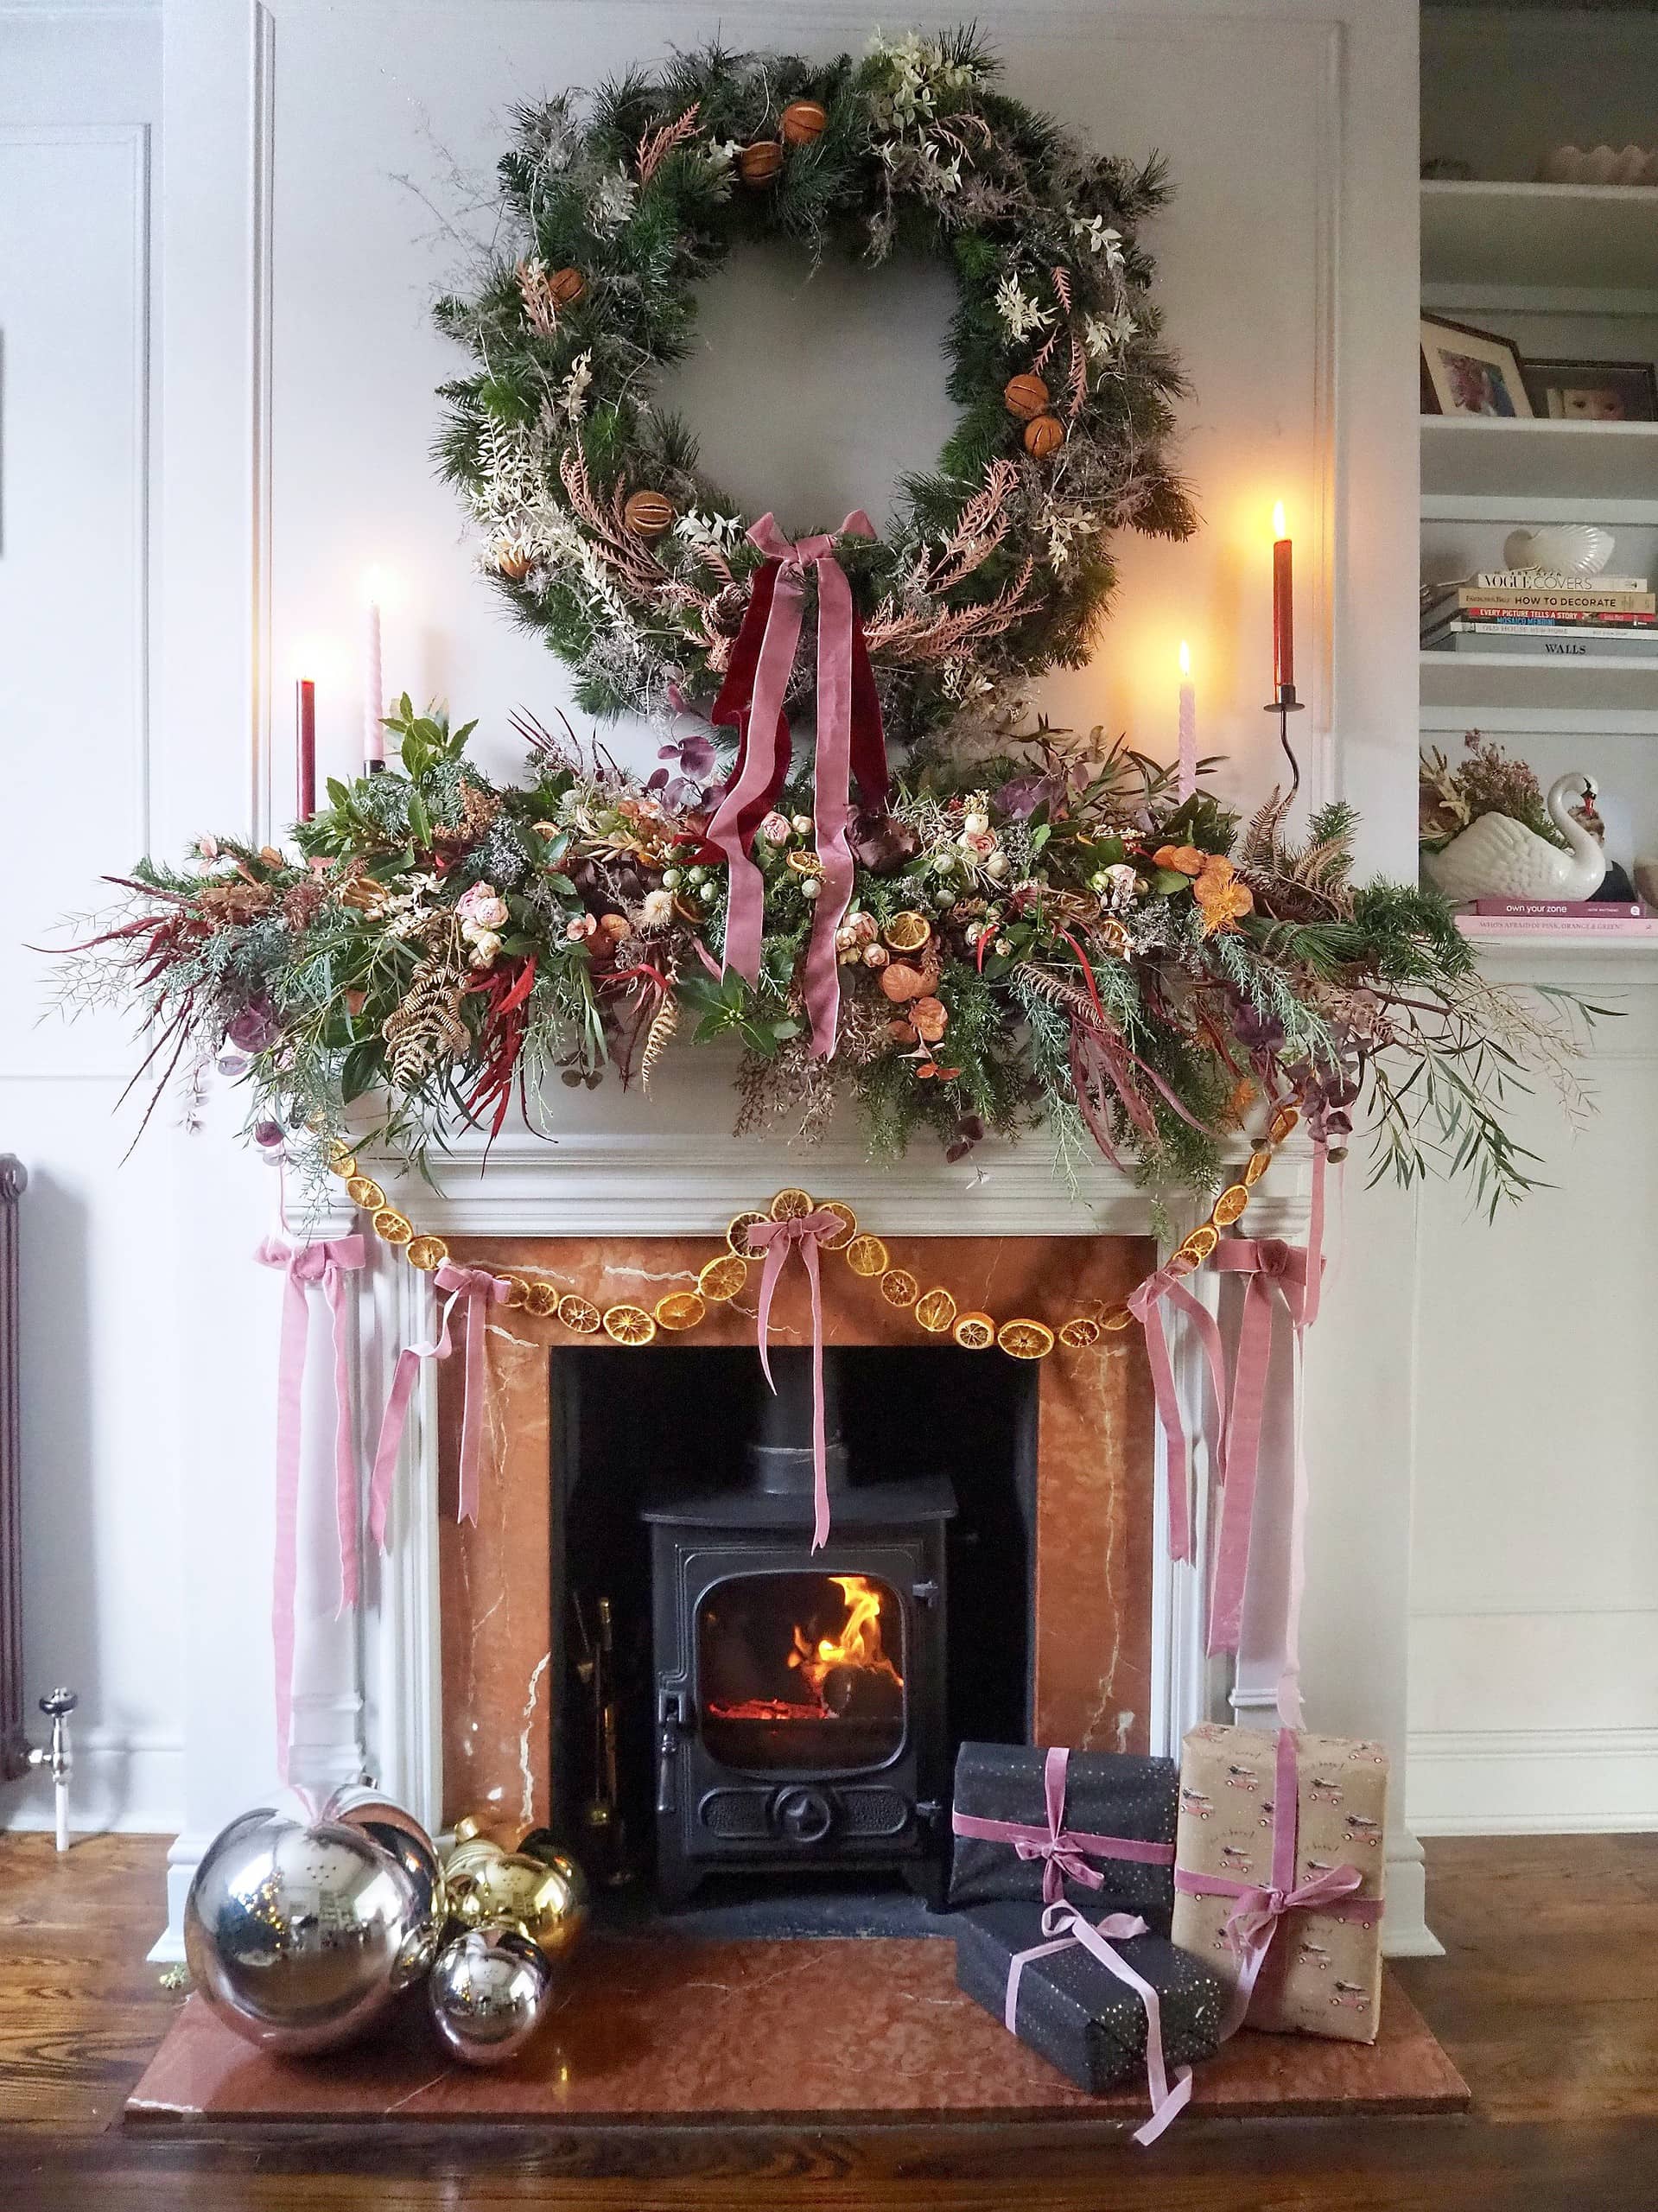 colorful wreath idea above the fireplace